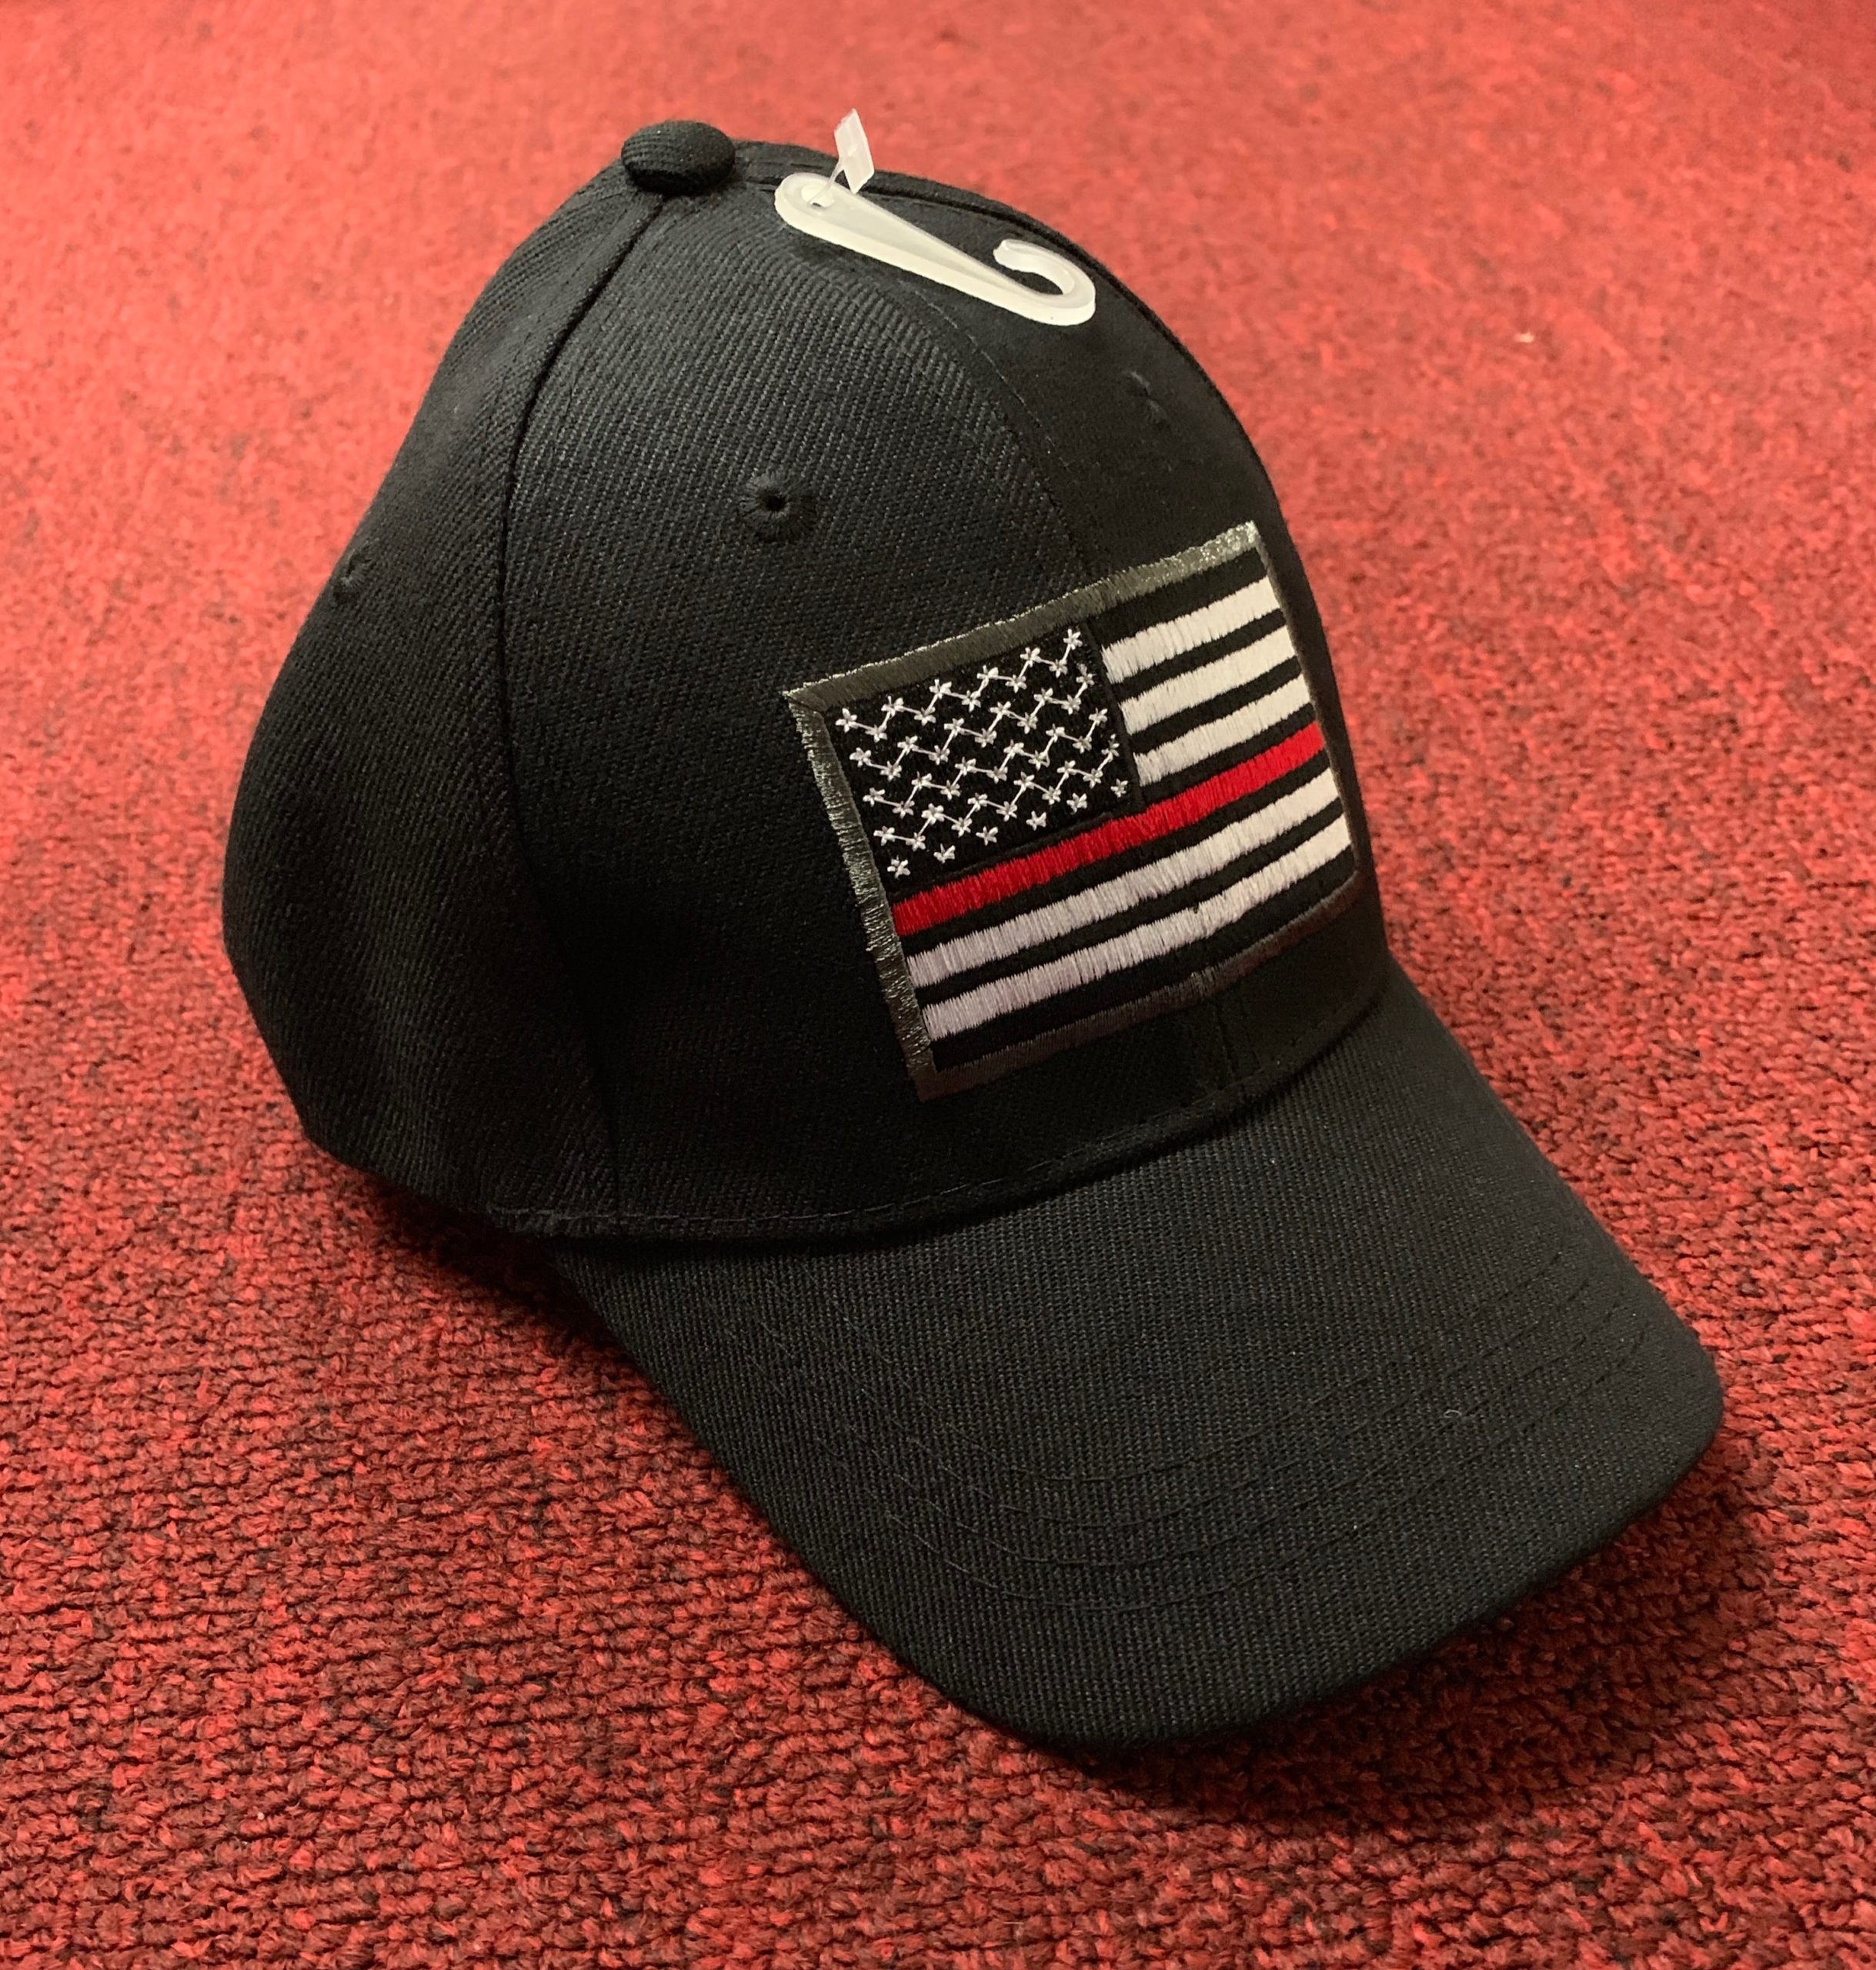 Baseball Cap - Support Your Fire Department